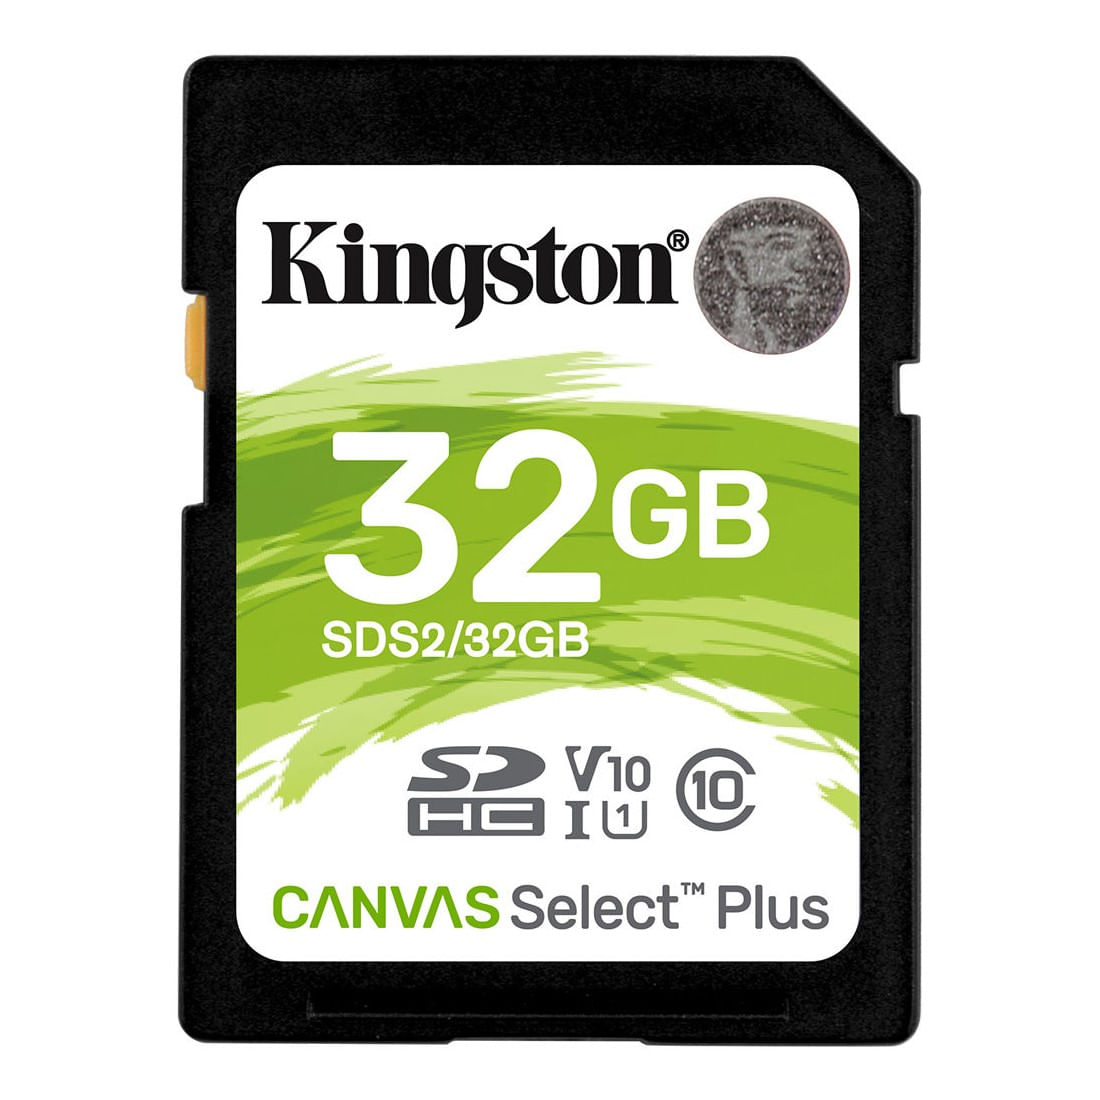 Memoria Kingston 32GB Canvas Select Plus UHS-I SDHC Memory Card - SDS2/32GB